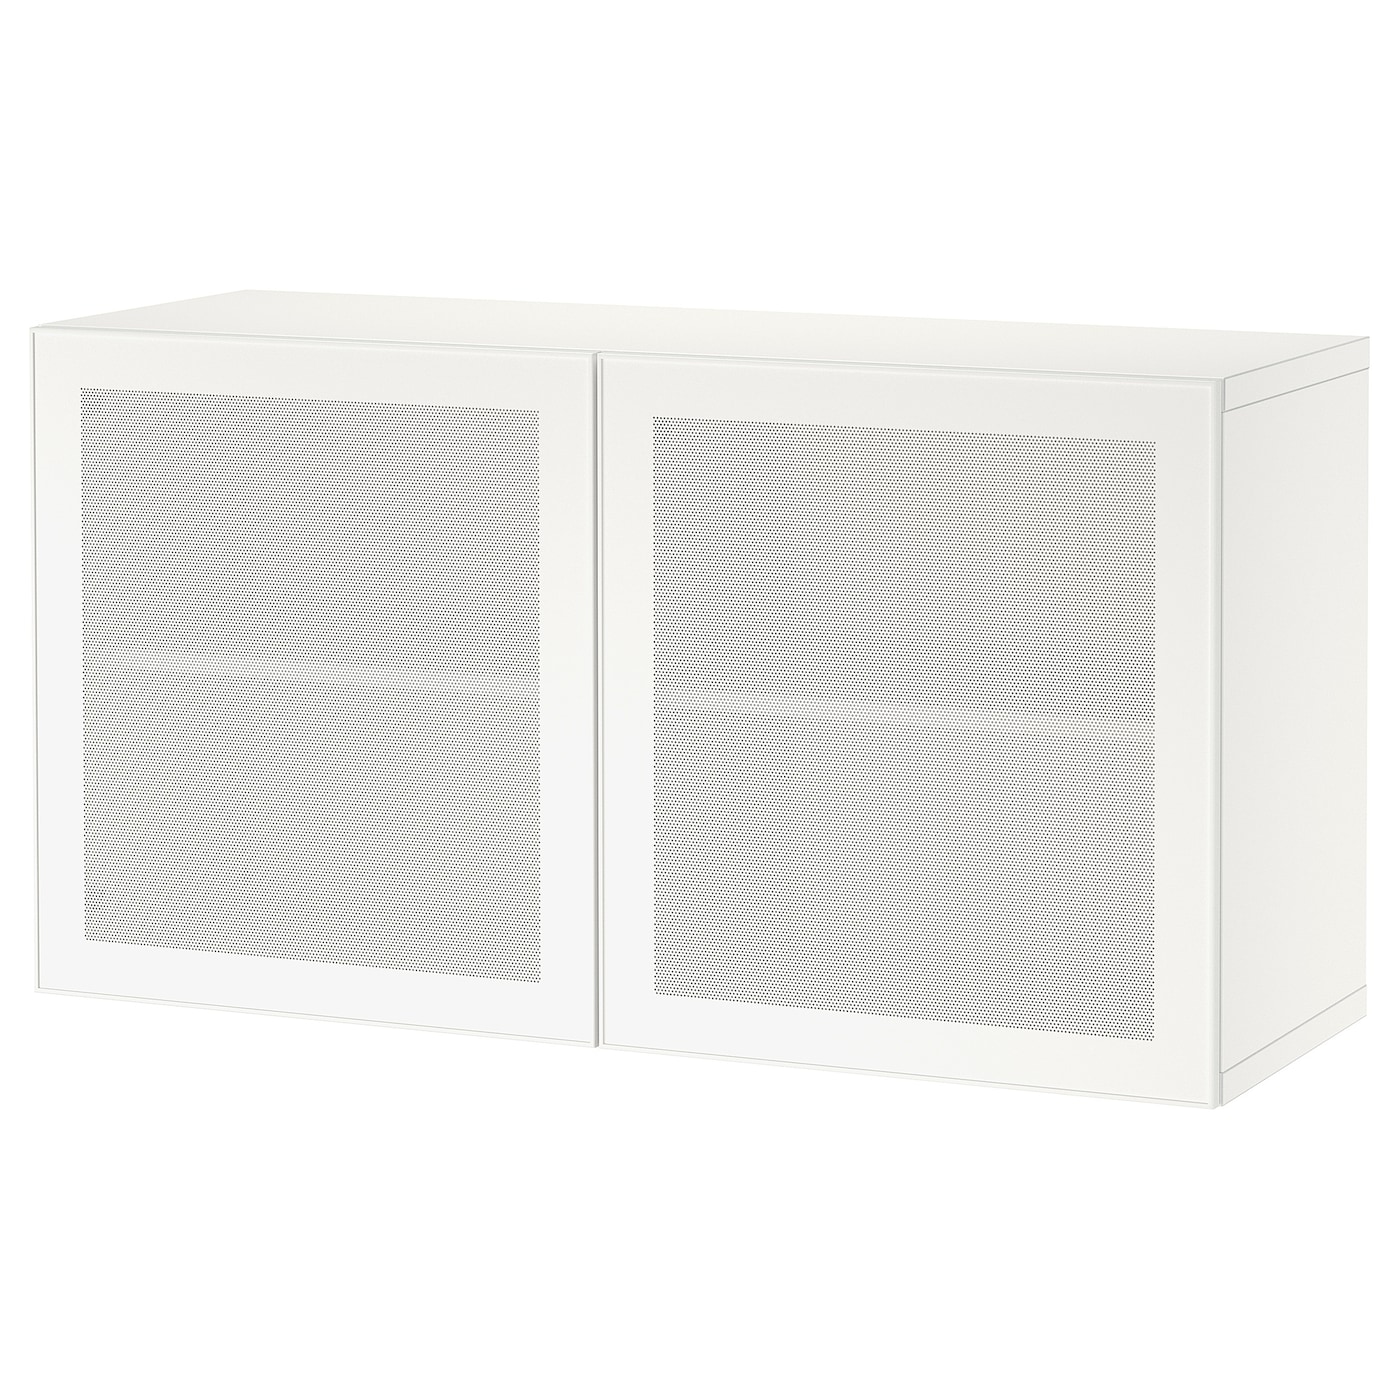 Навесной шкаф - IKEA BESTÅ/BESTA, 120x42x64 см, белый, БЕСТО ИКЕА